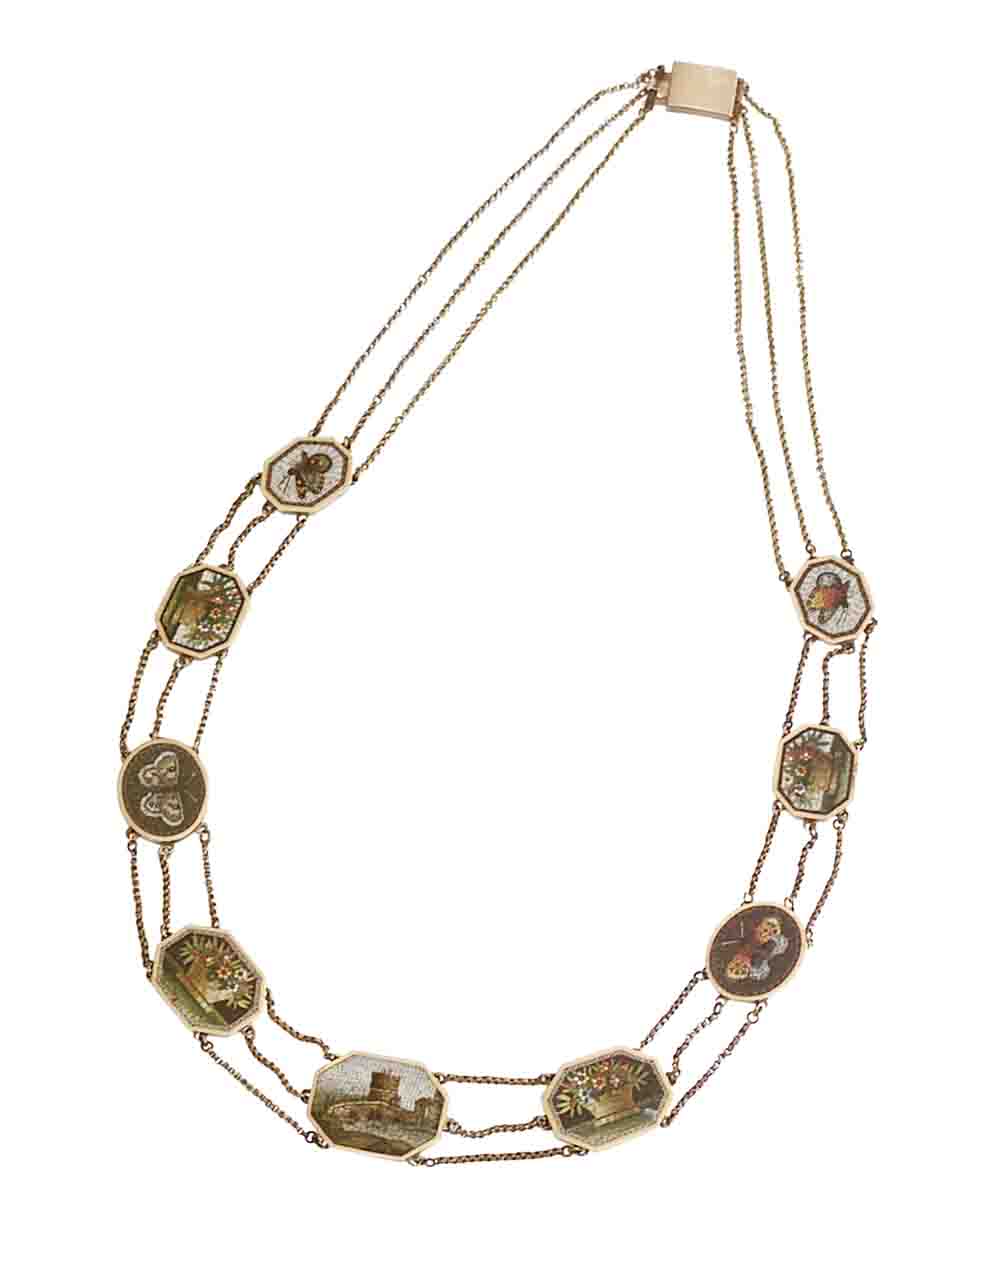 Necklace belonging to Emma